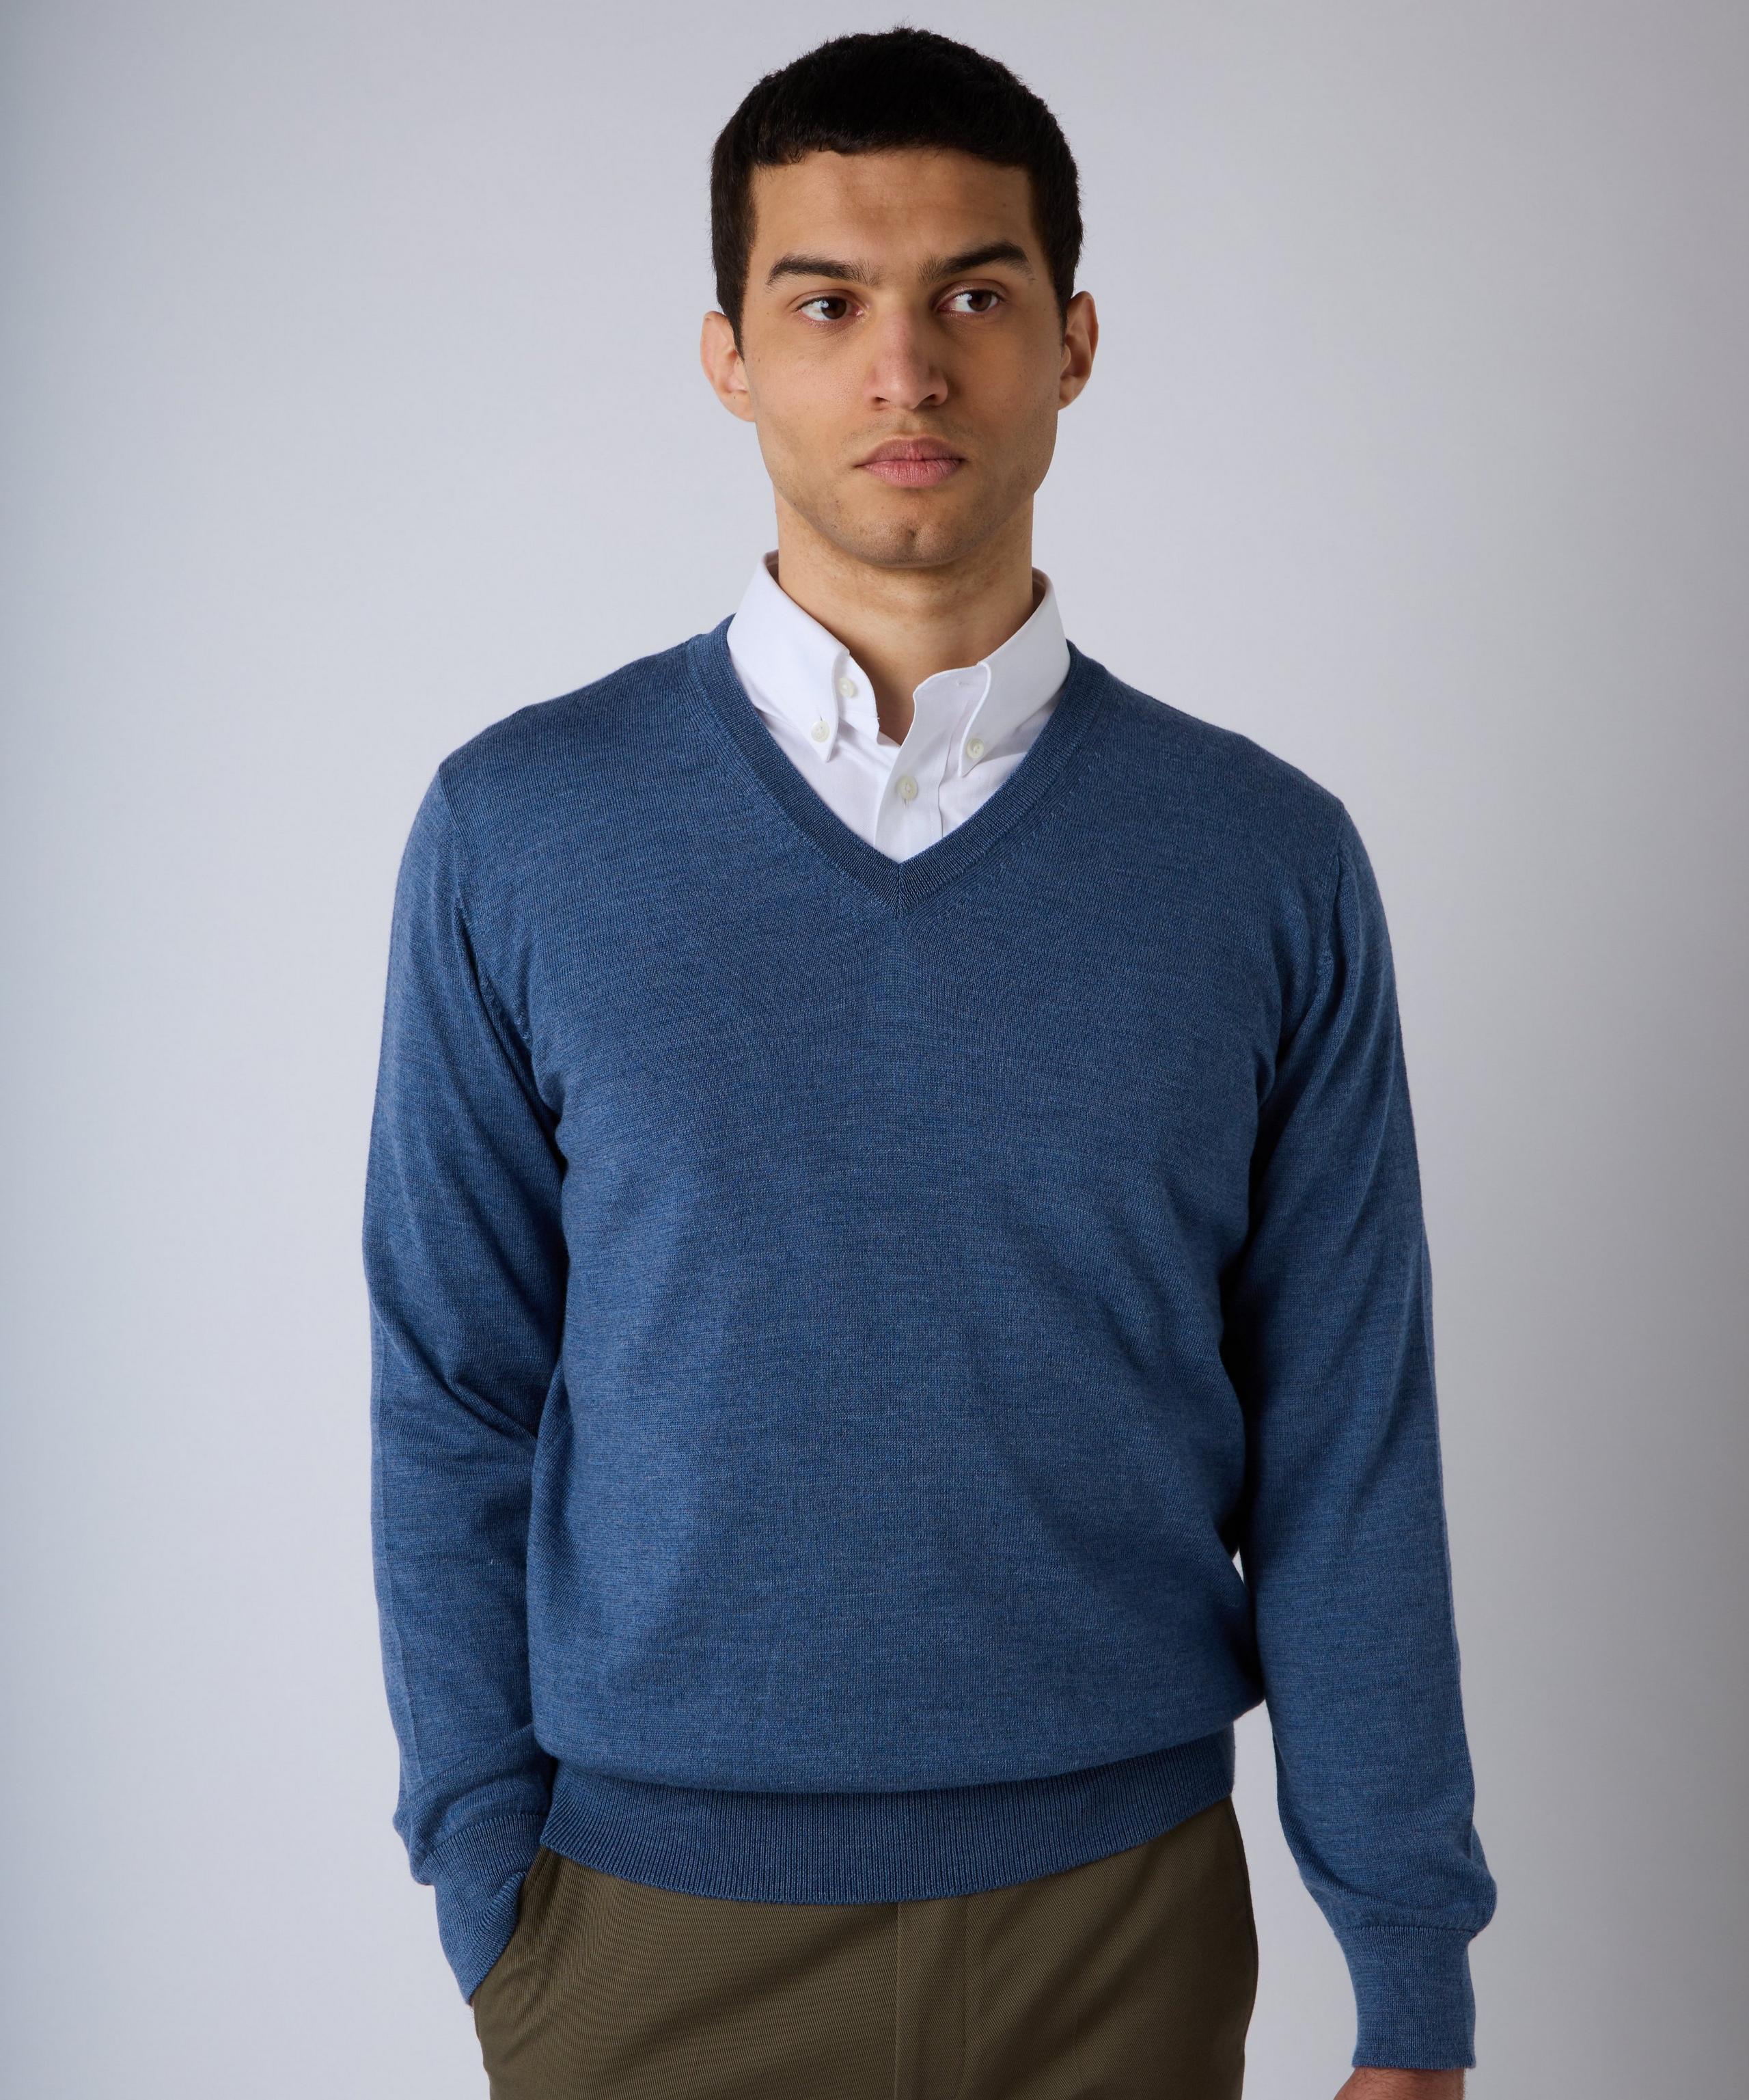 Airforce Blue Merino Wool V-Neck Sweater | Thomas Pink